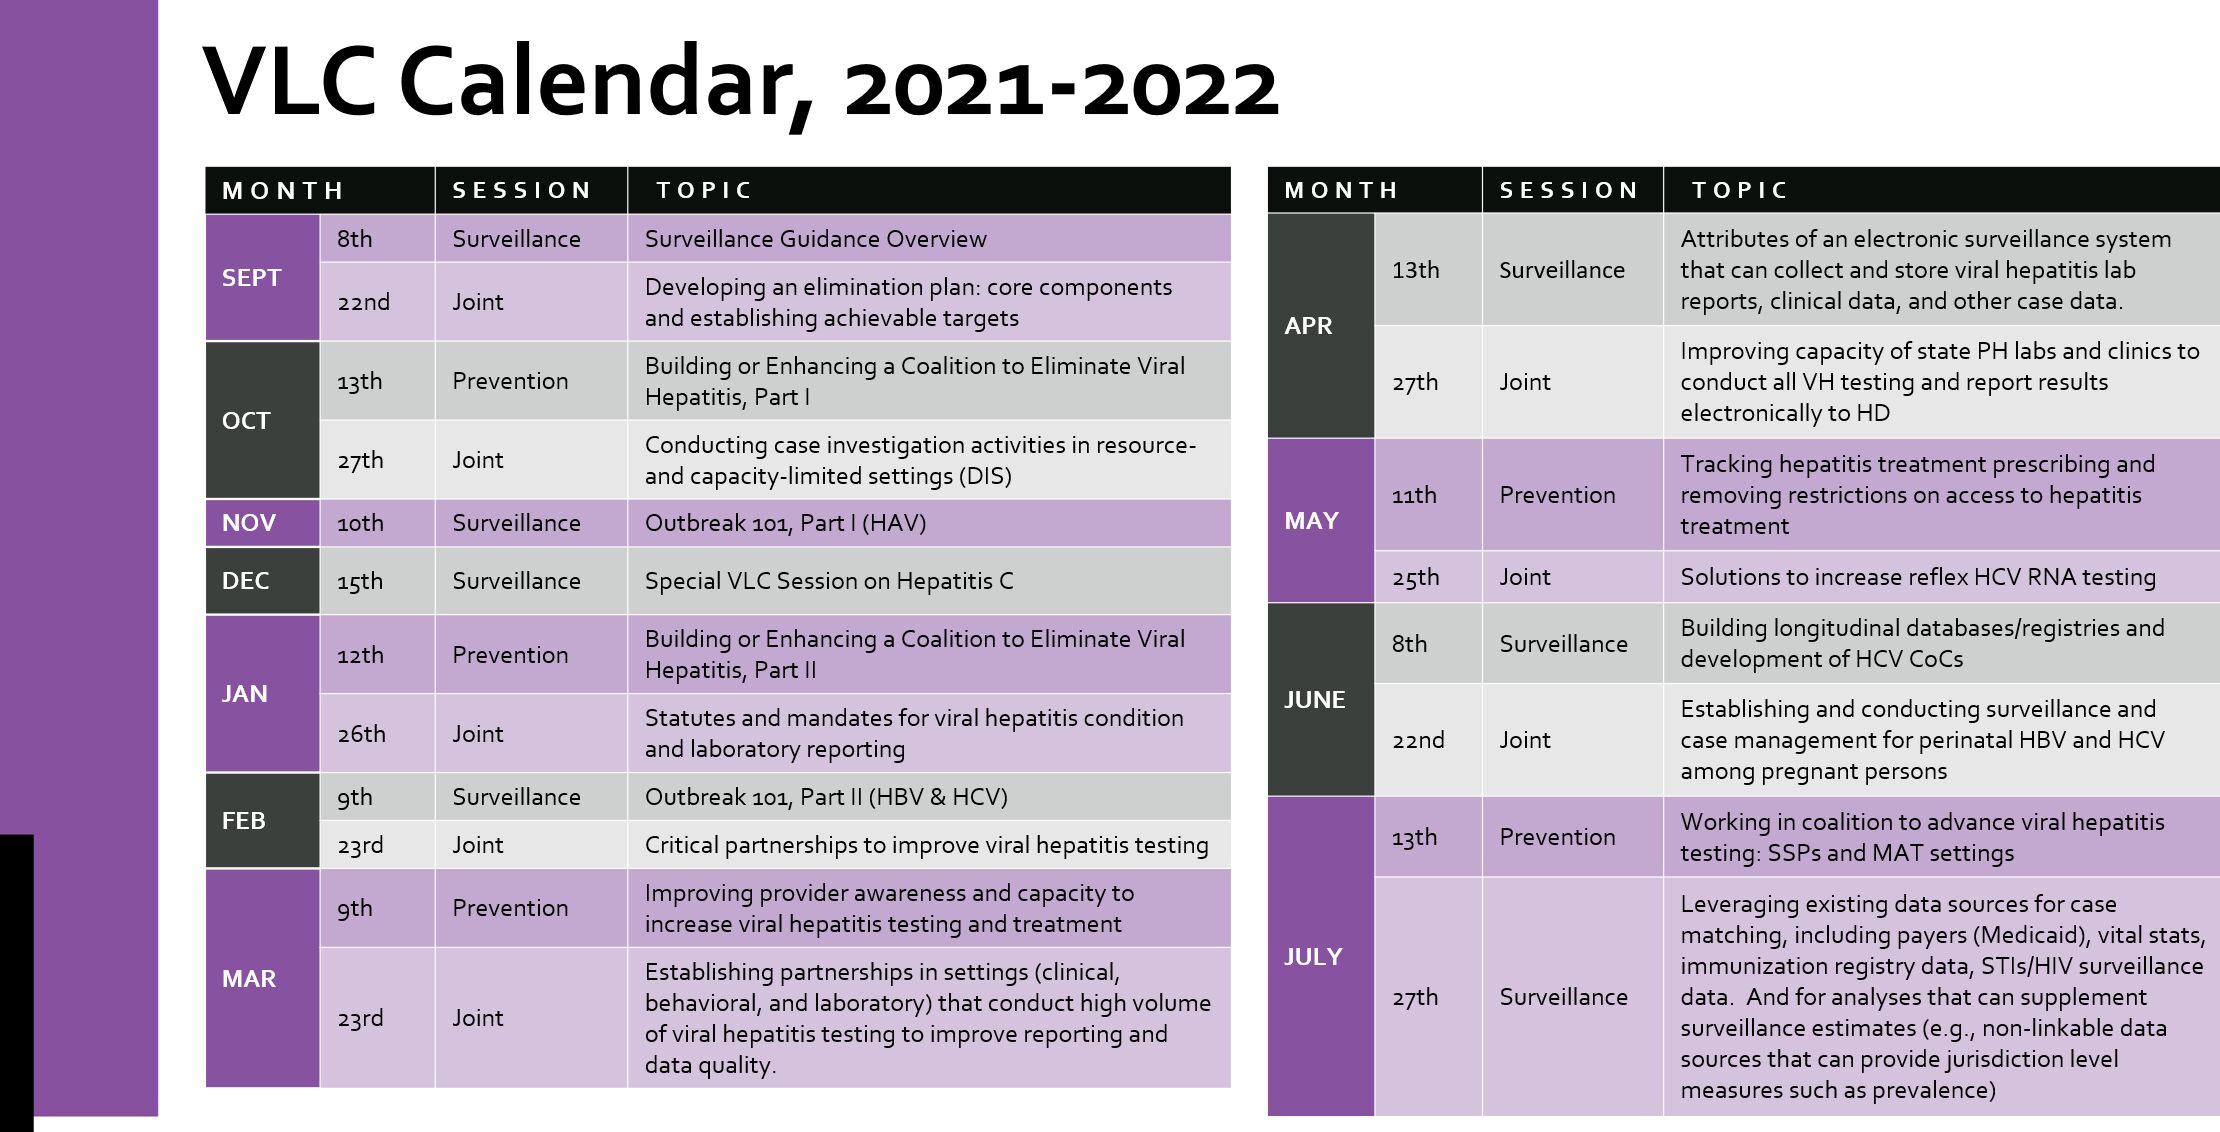 VLC Calendar, 2021-2022